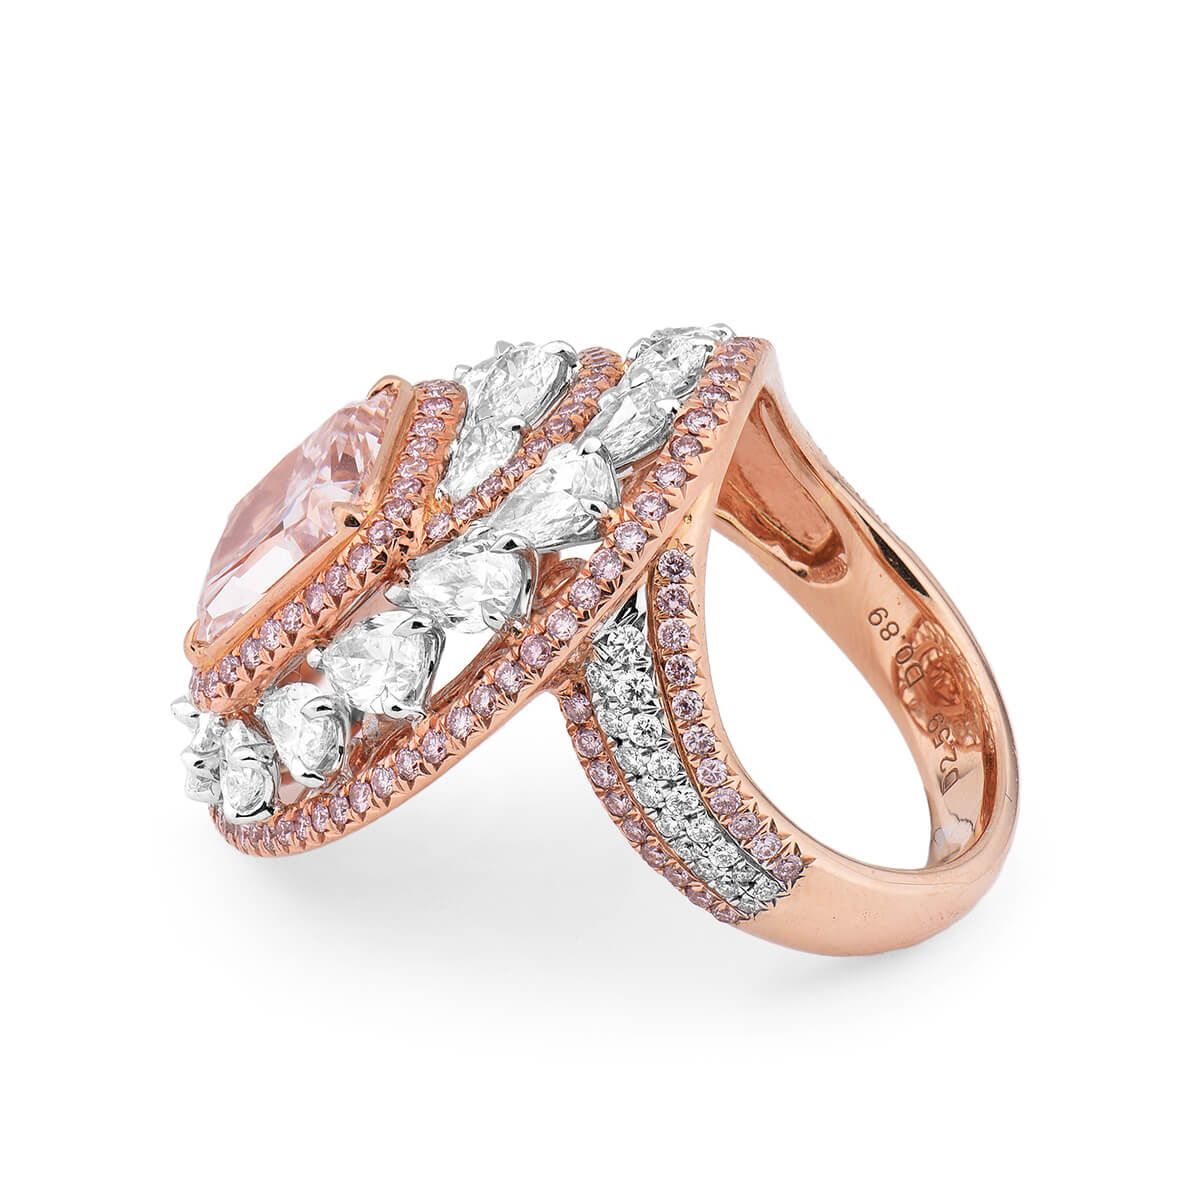 Light Pink Diamond Ring, 6.49 Ct. TW, Cushion shape, GIA Certified, 5181115159